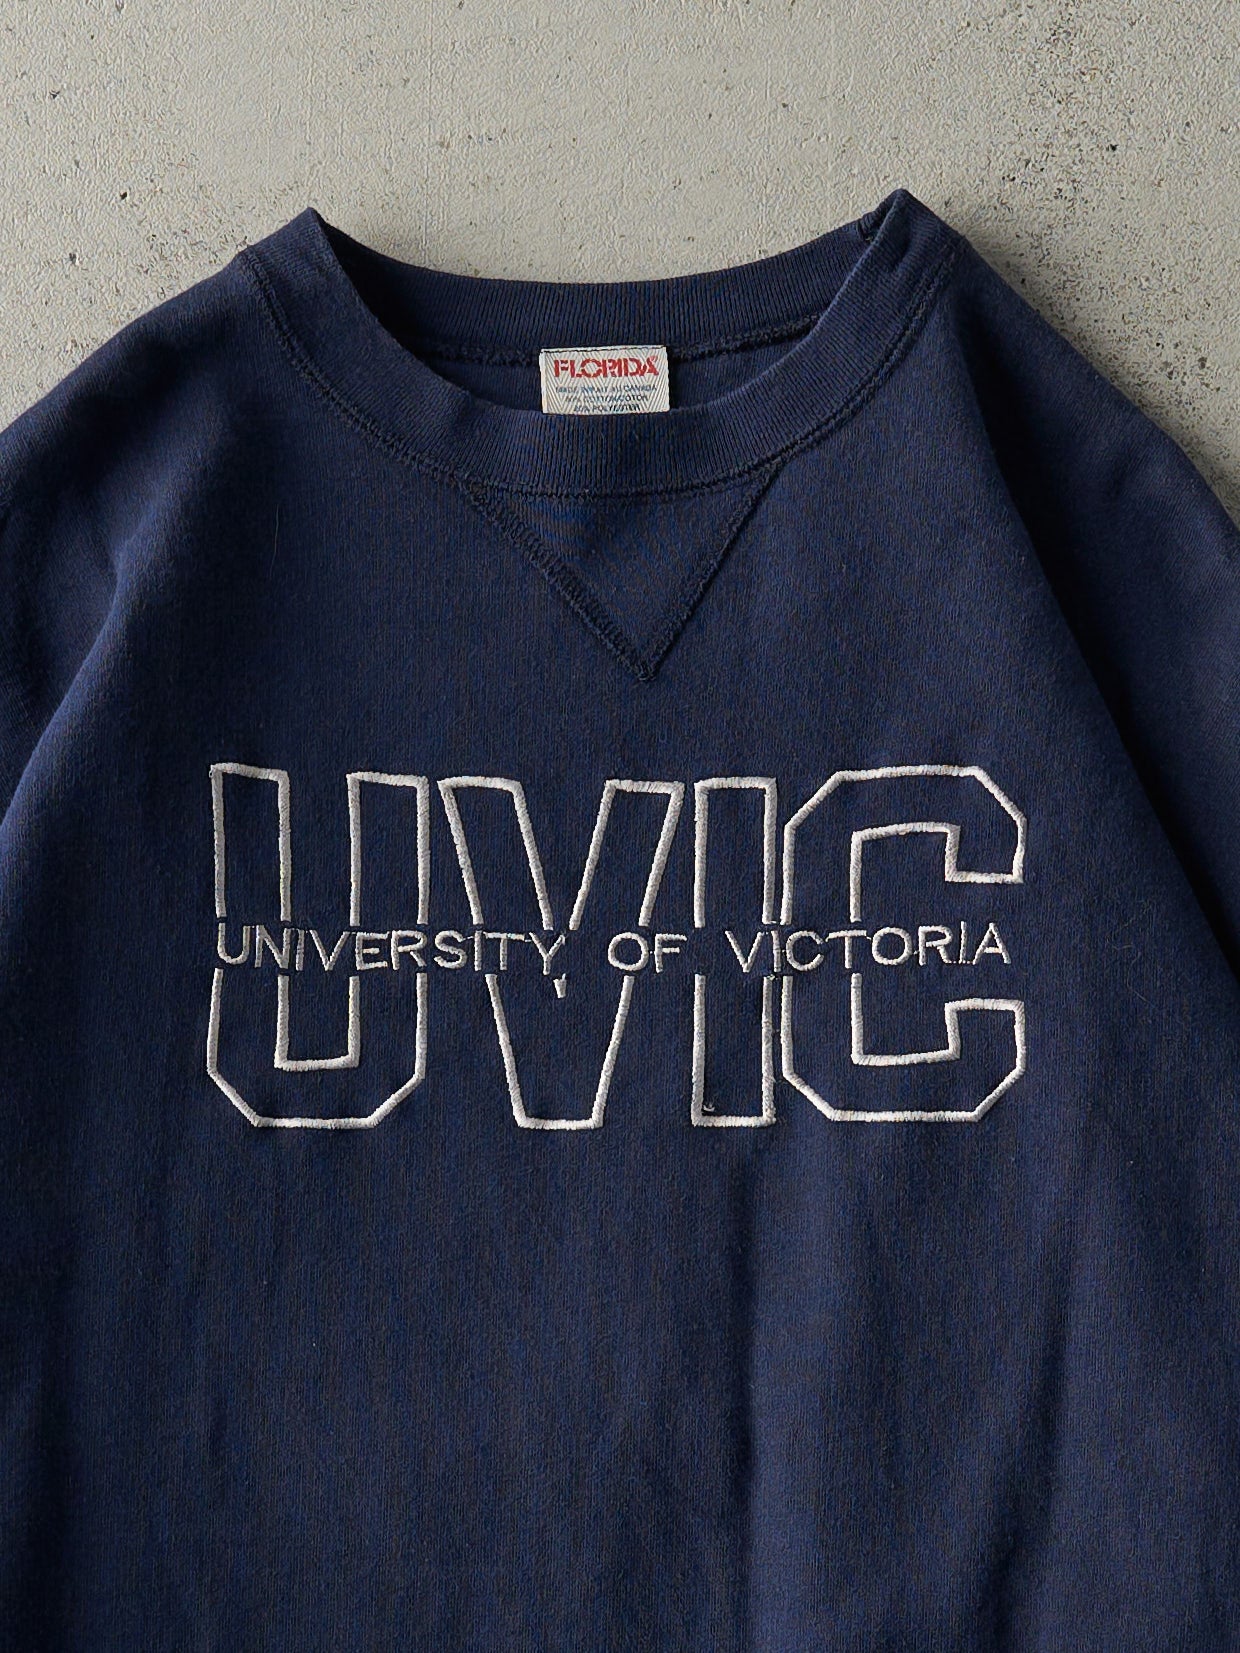 Vintage 90s Navy Blue University of Victoria Crewneck (L)